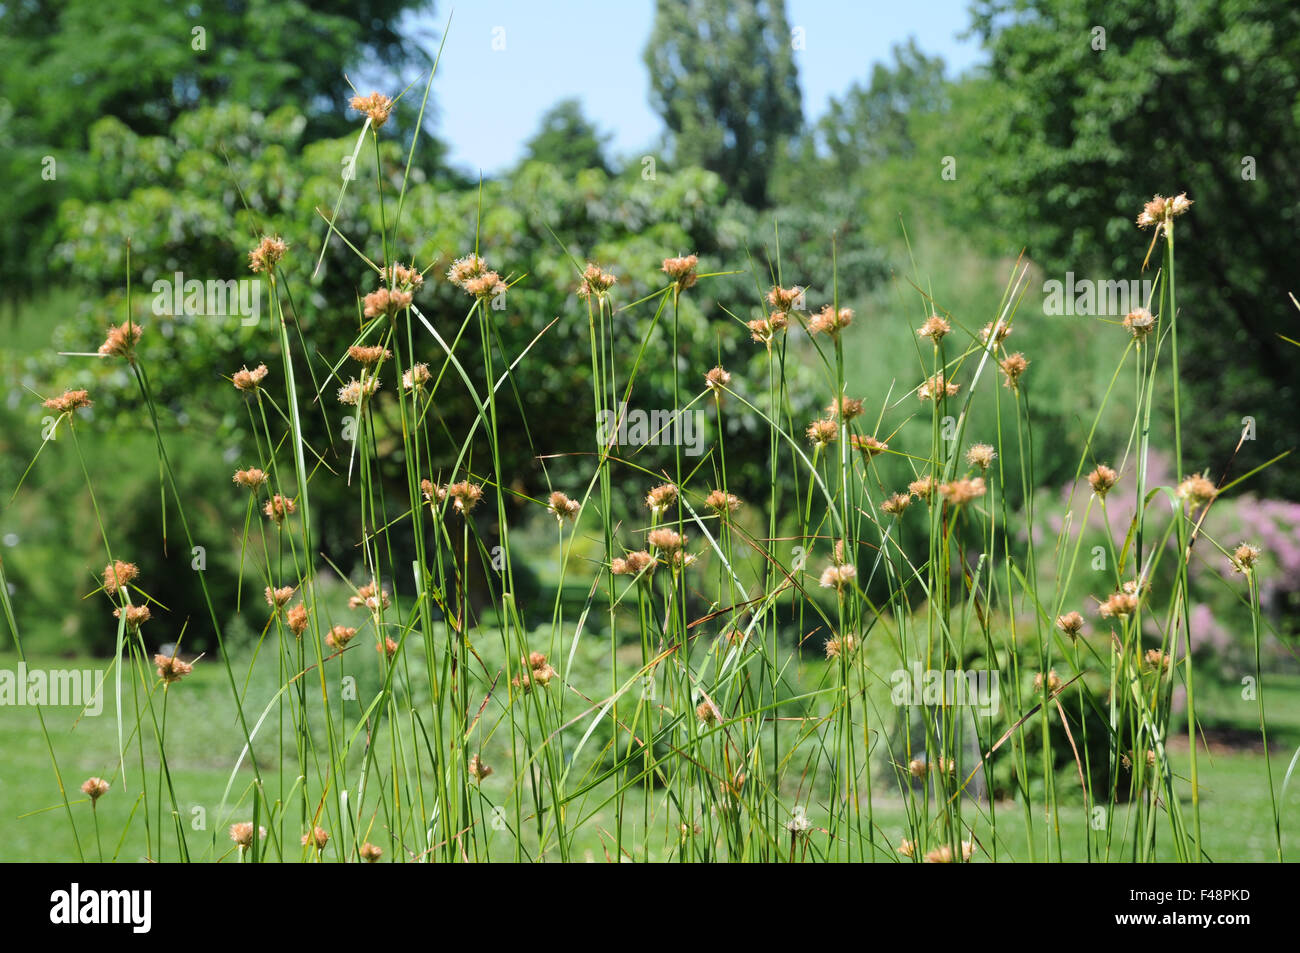 Tawny cottongrass Stock Photo